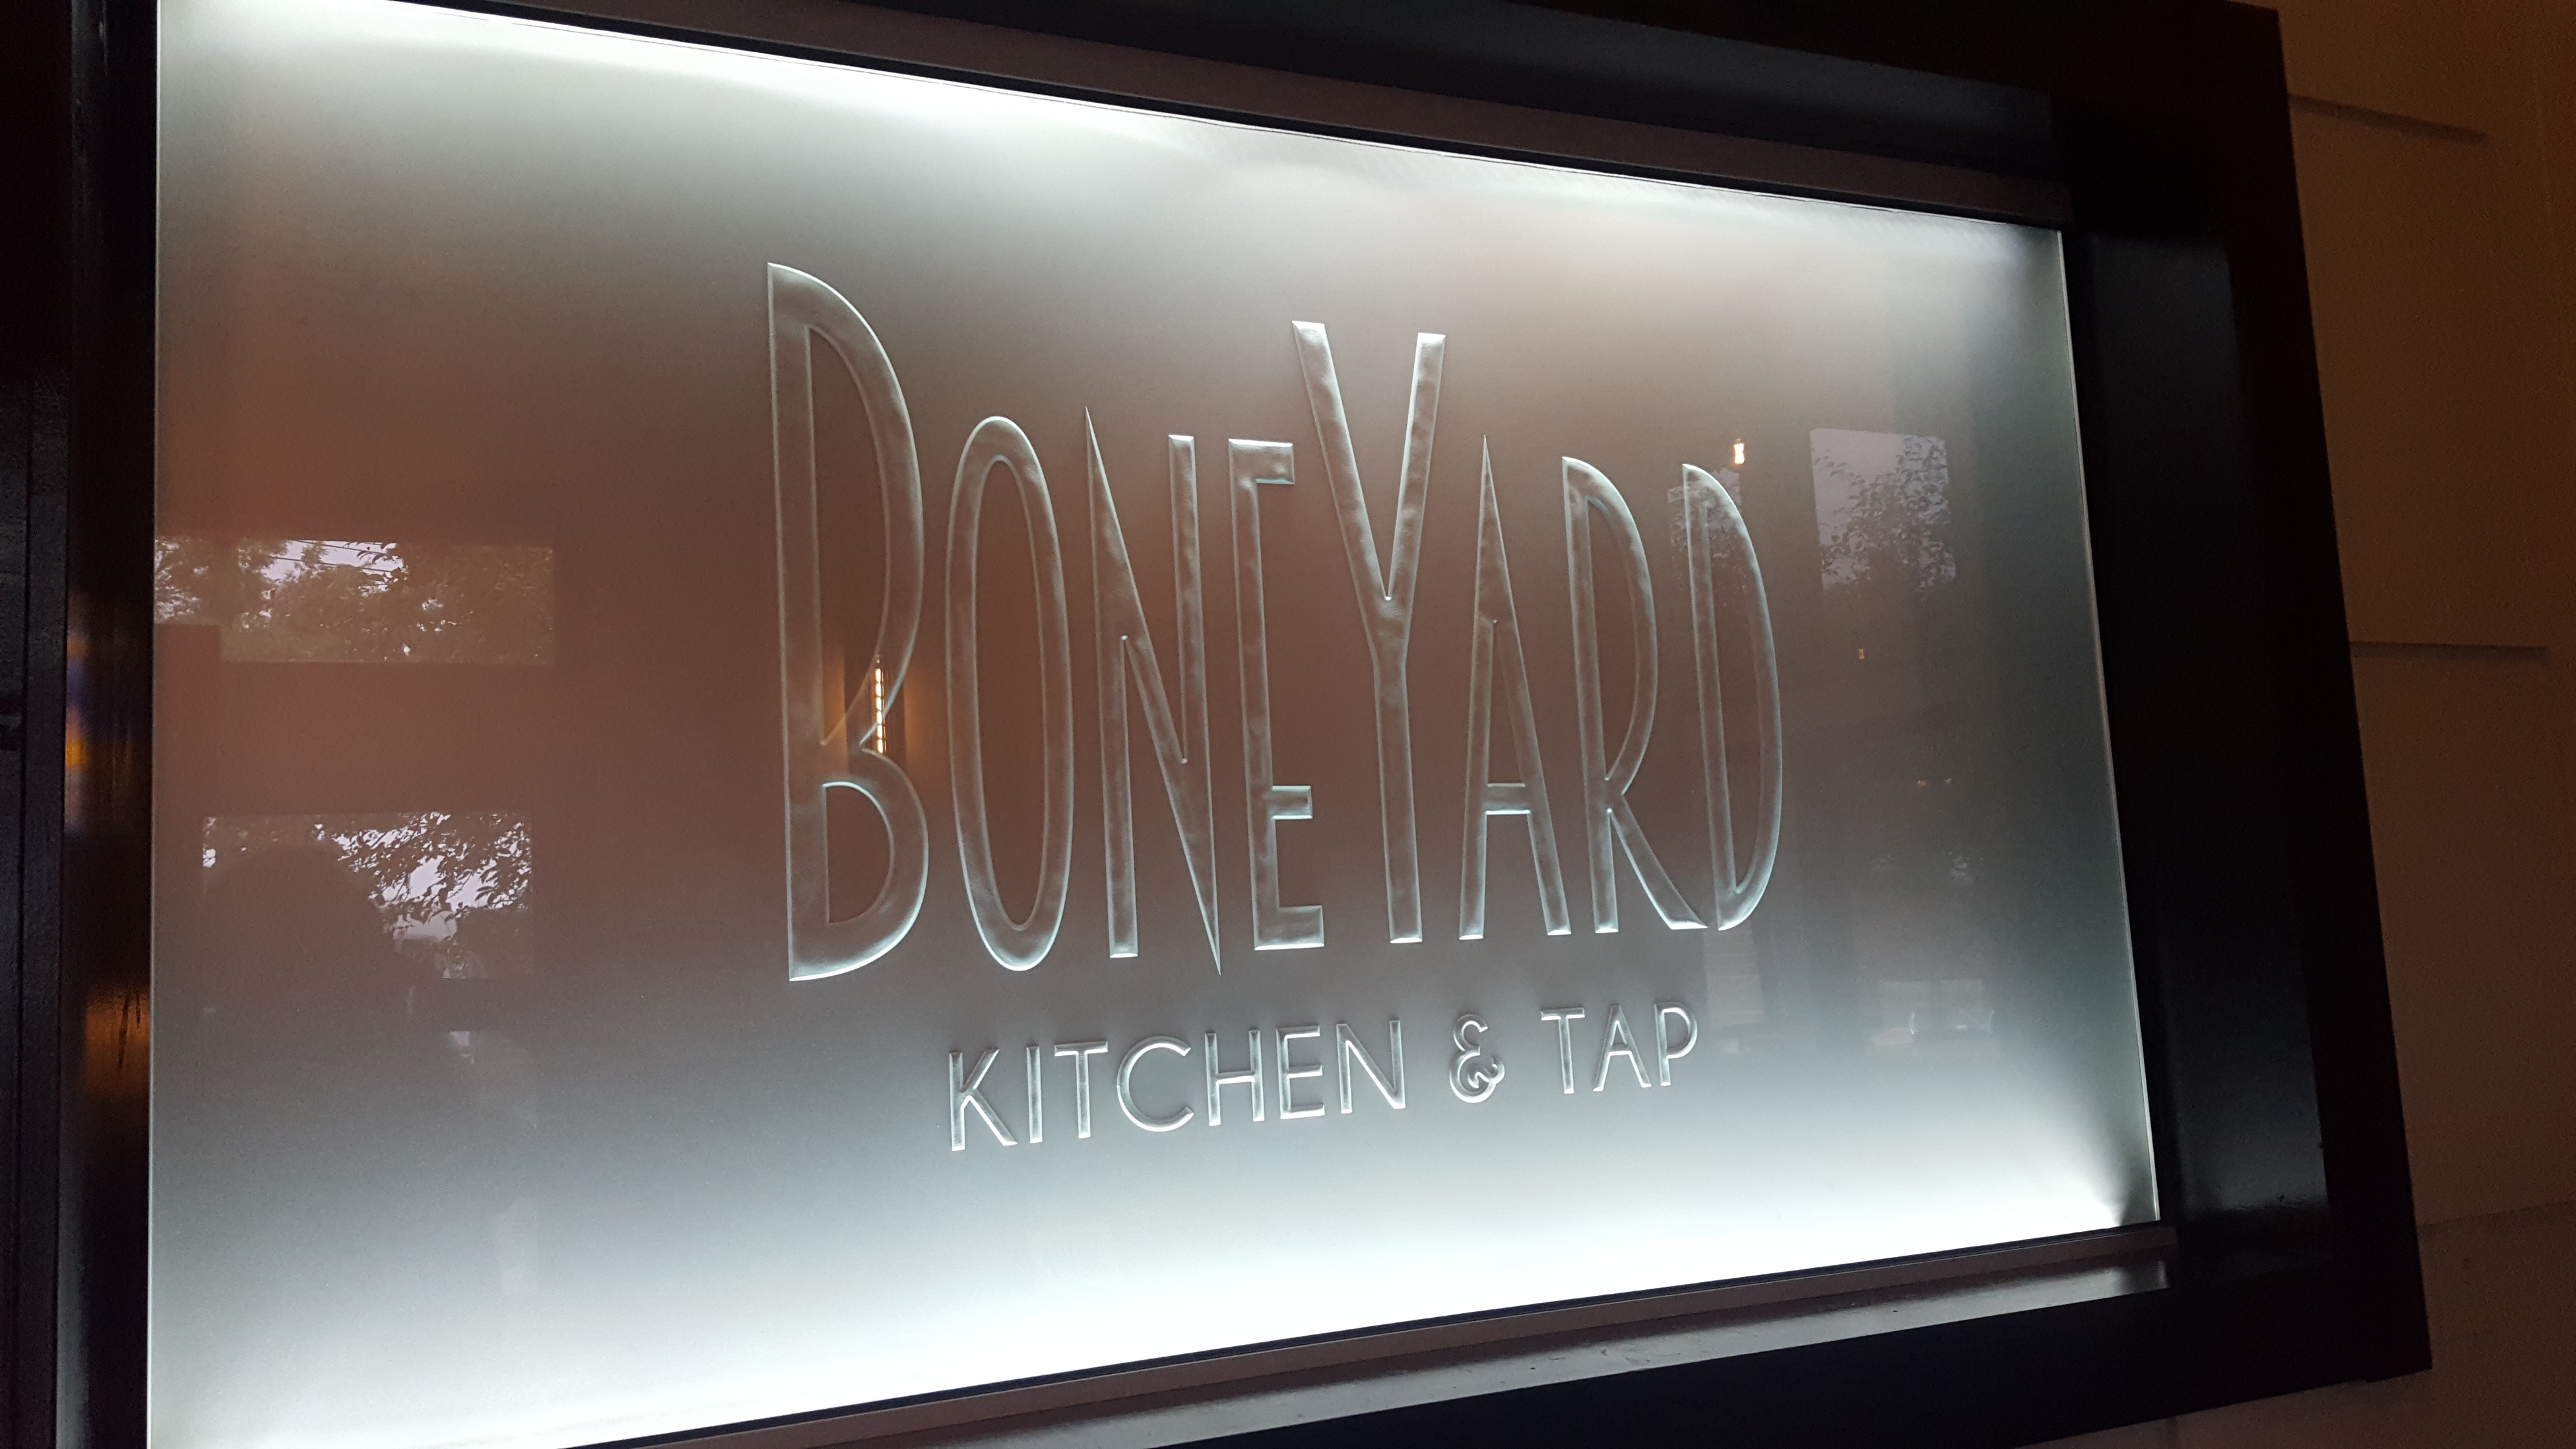 Boneyard Kitchen & Tap sandblasted logo on glass